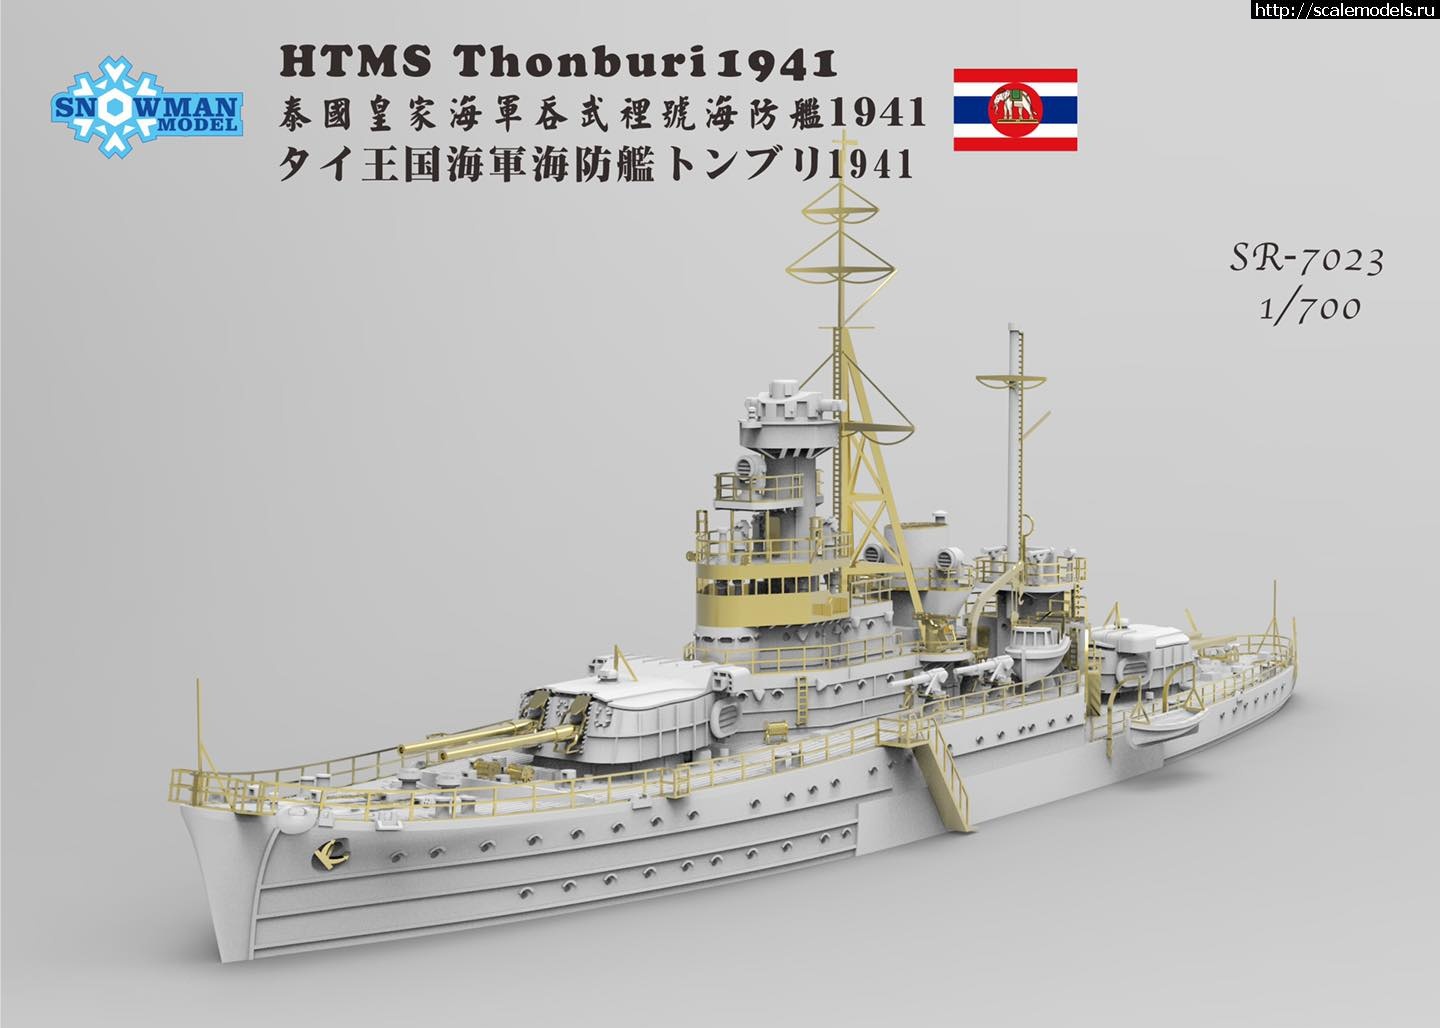 1594336083_83623207_1810254805806568_5330368937286707767_o.jpg :  Snowman Model 1/700    HTMS Thonburi 1941  